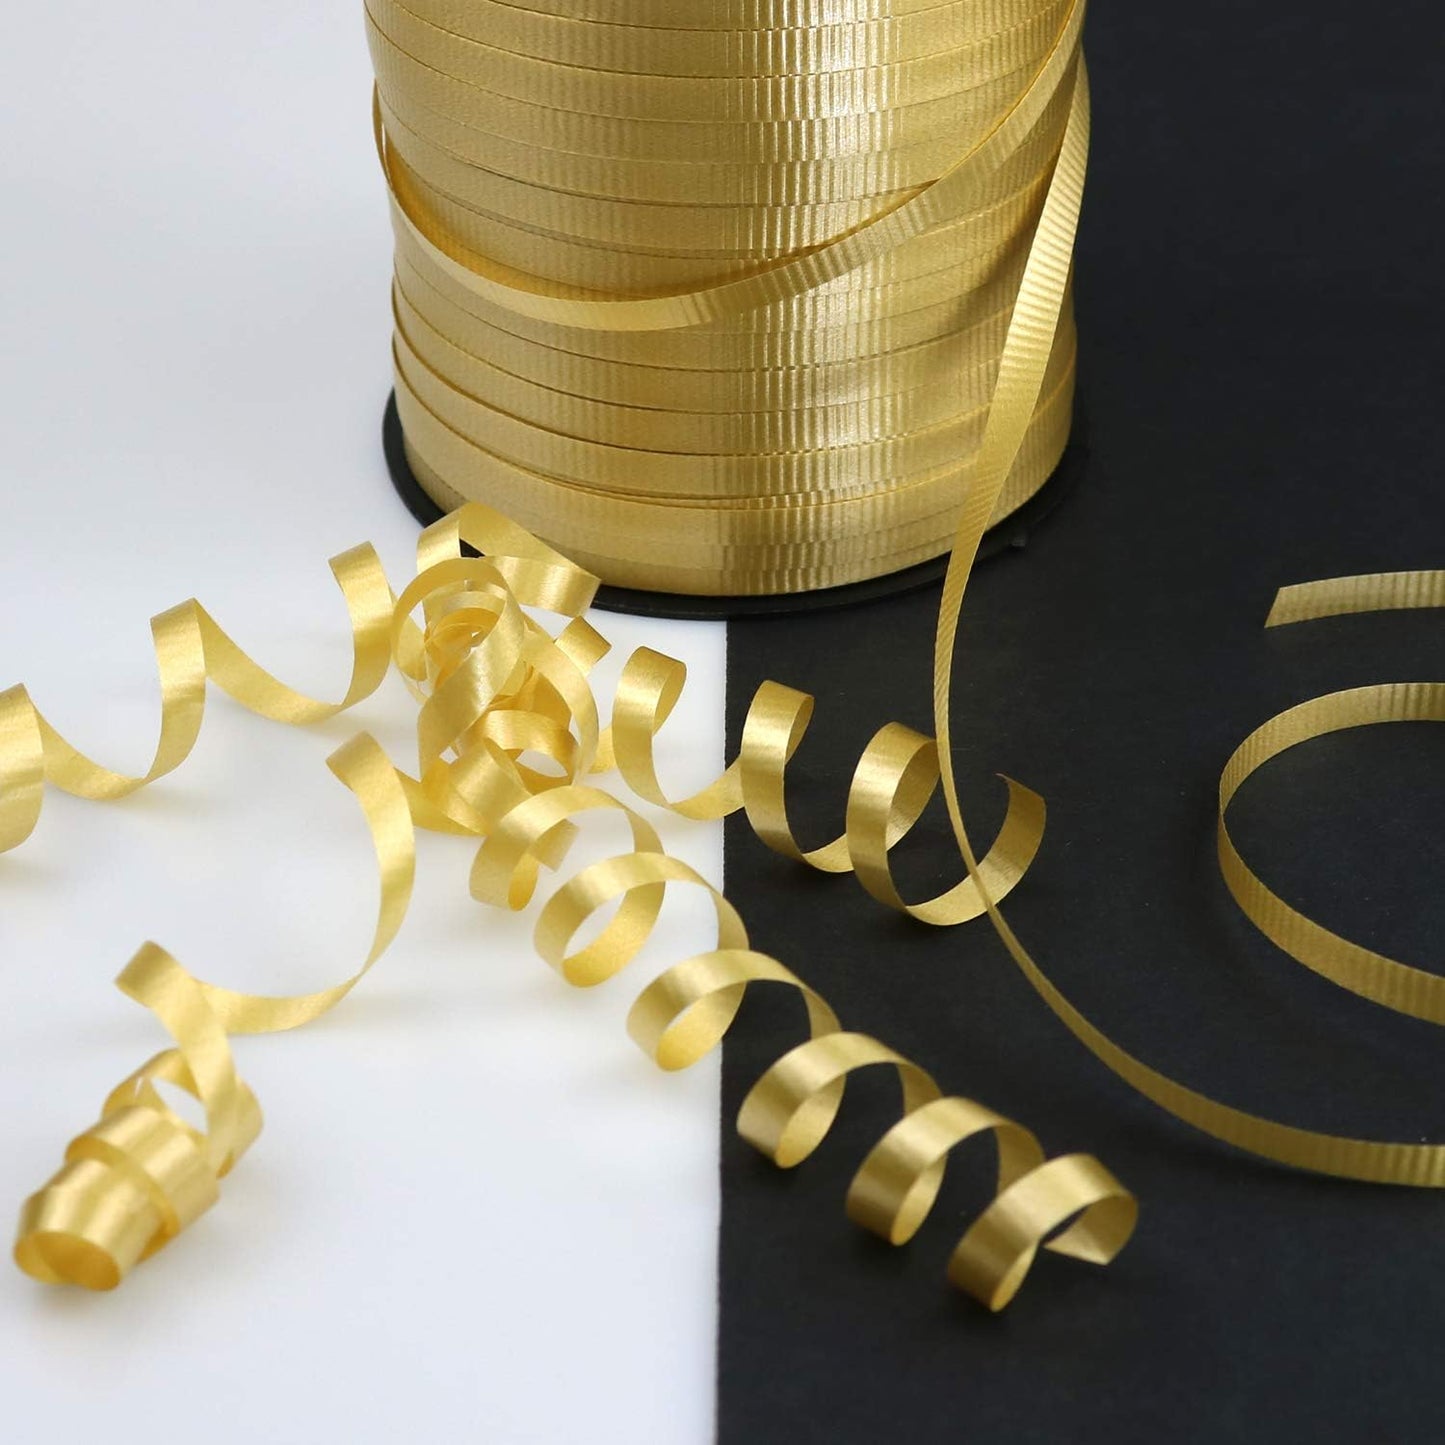 GIFTEXPRESS Cinta de rizar dorada de 500 yardas para cinta de globos, cadena de globos, suministros para envolver regalos, decoraciones para fiestas, manualidades 